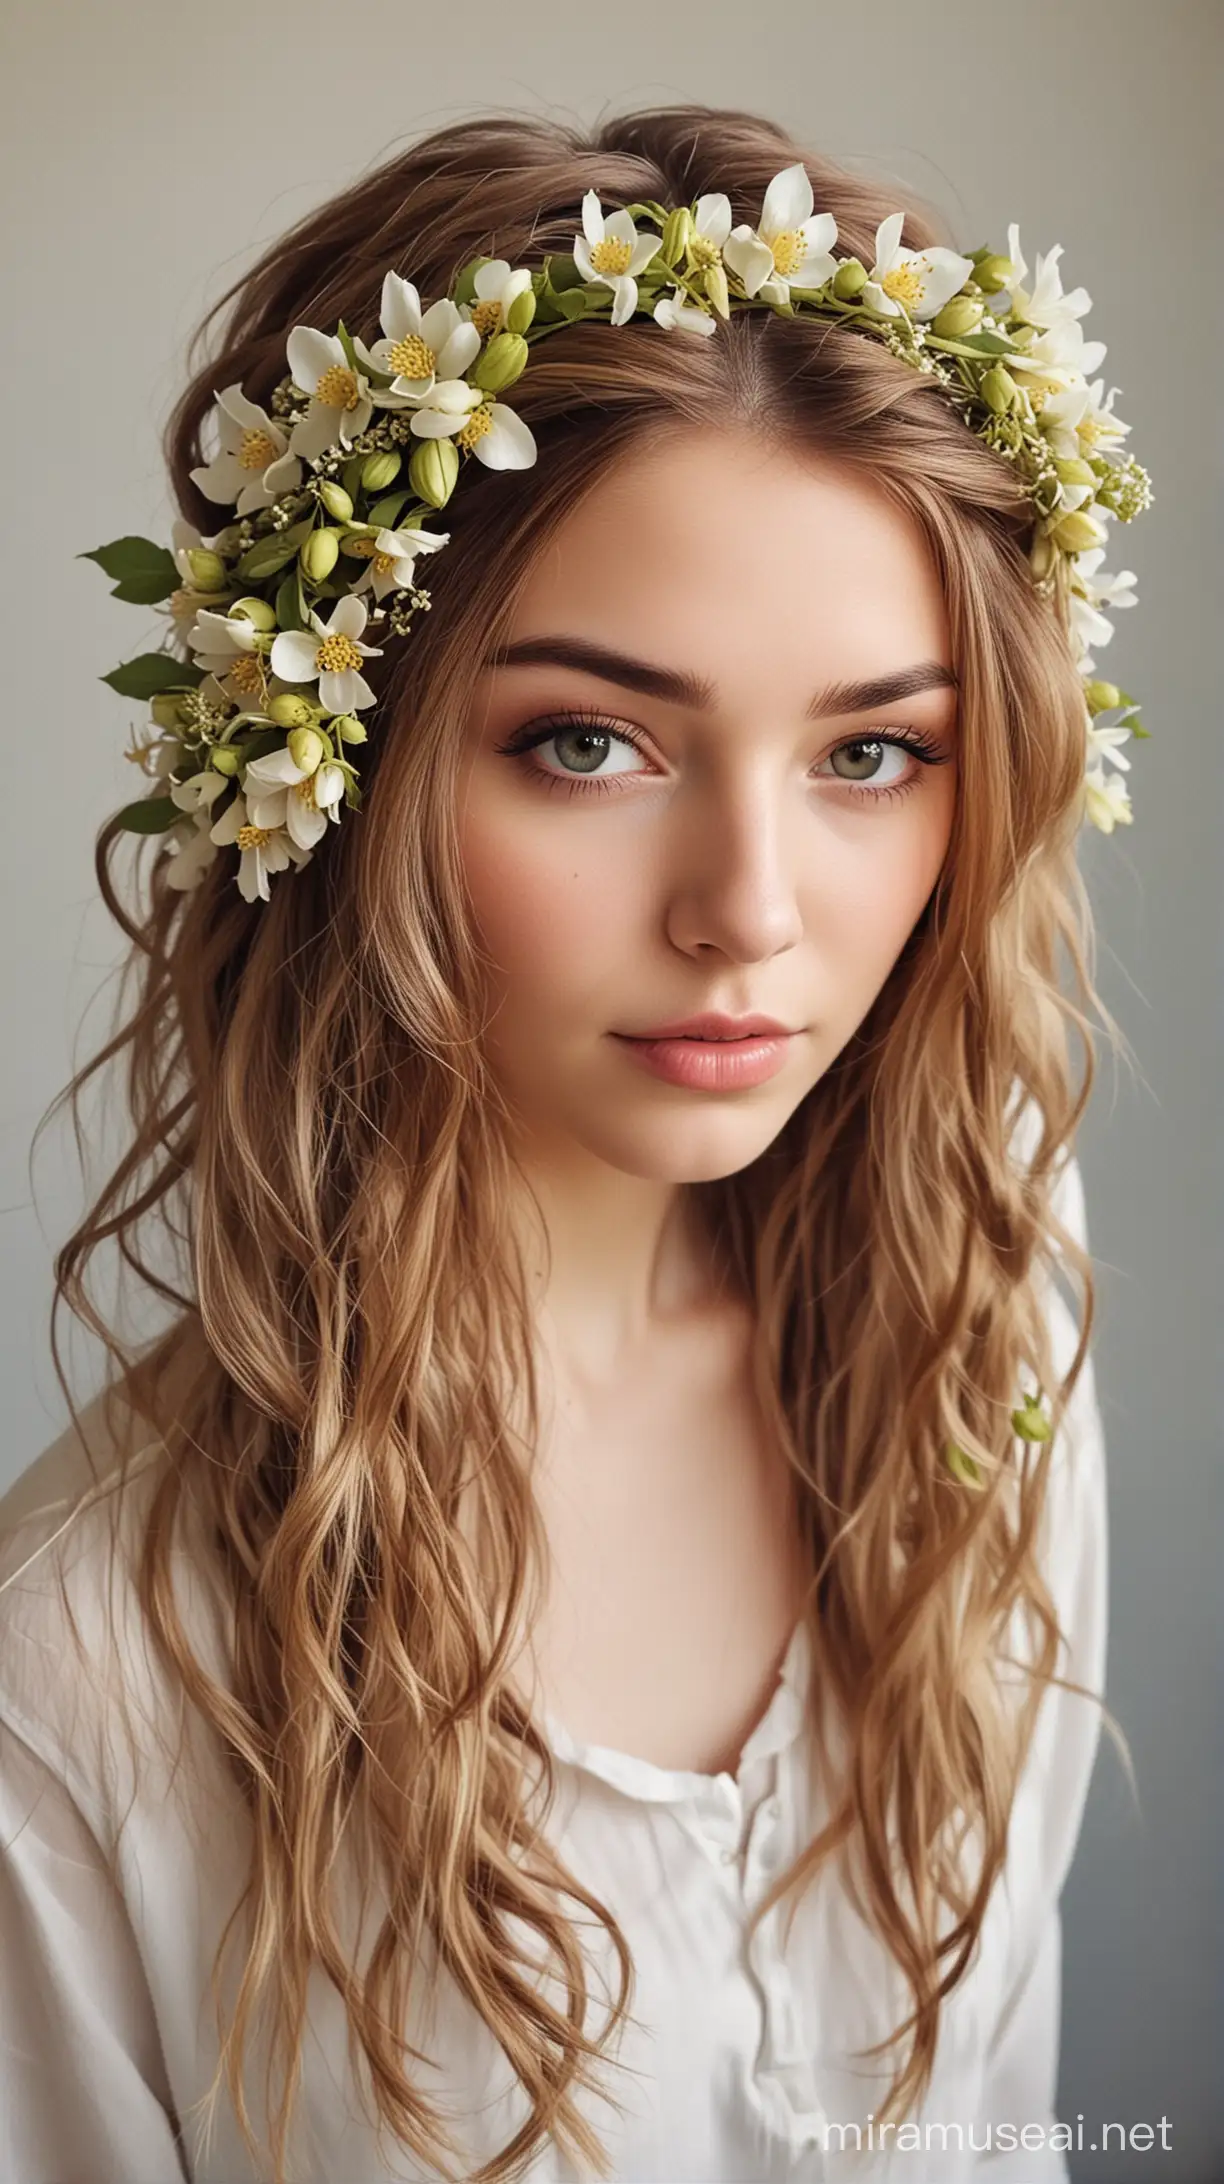 Floral Fantasy Graceful Hair Braids Amidst Blooming Flowers